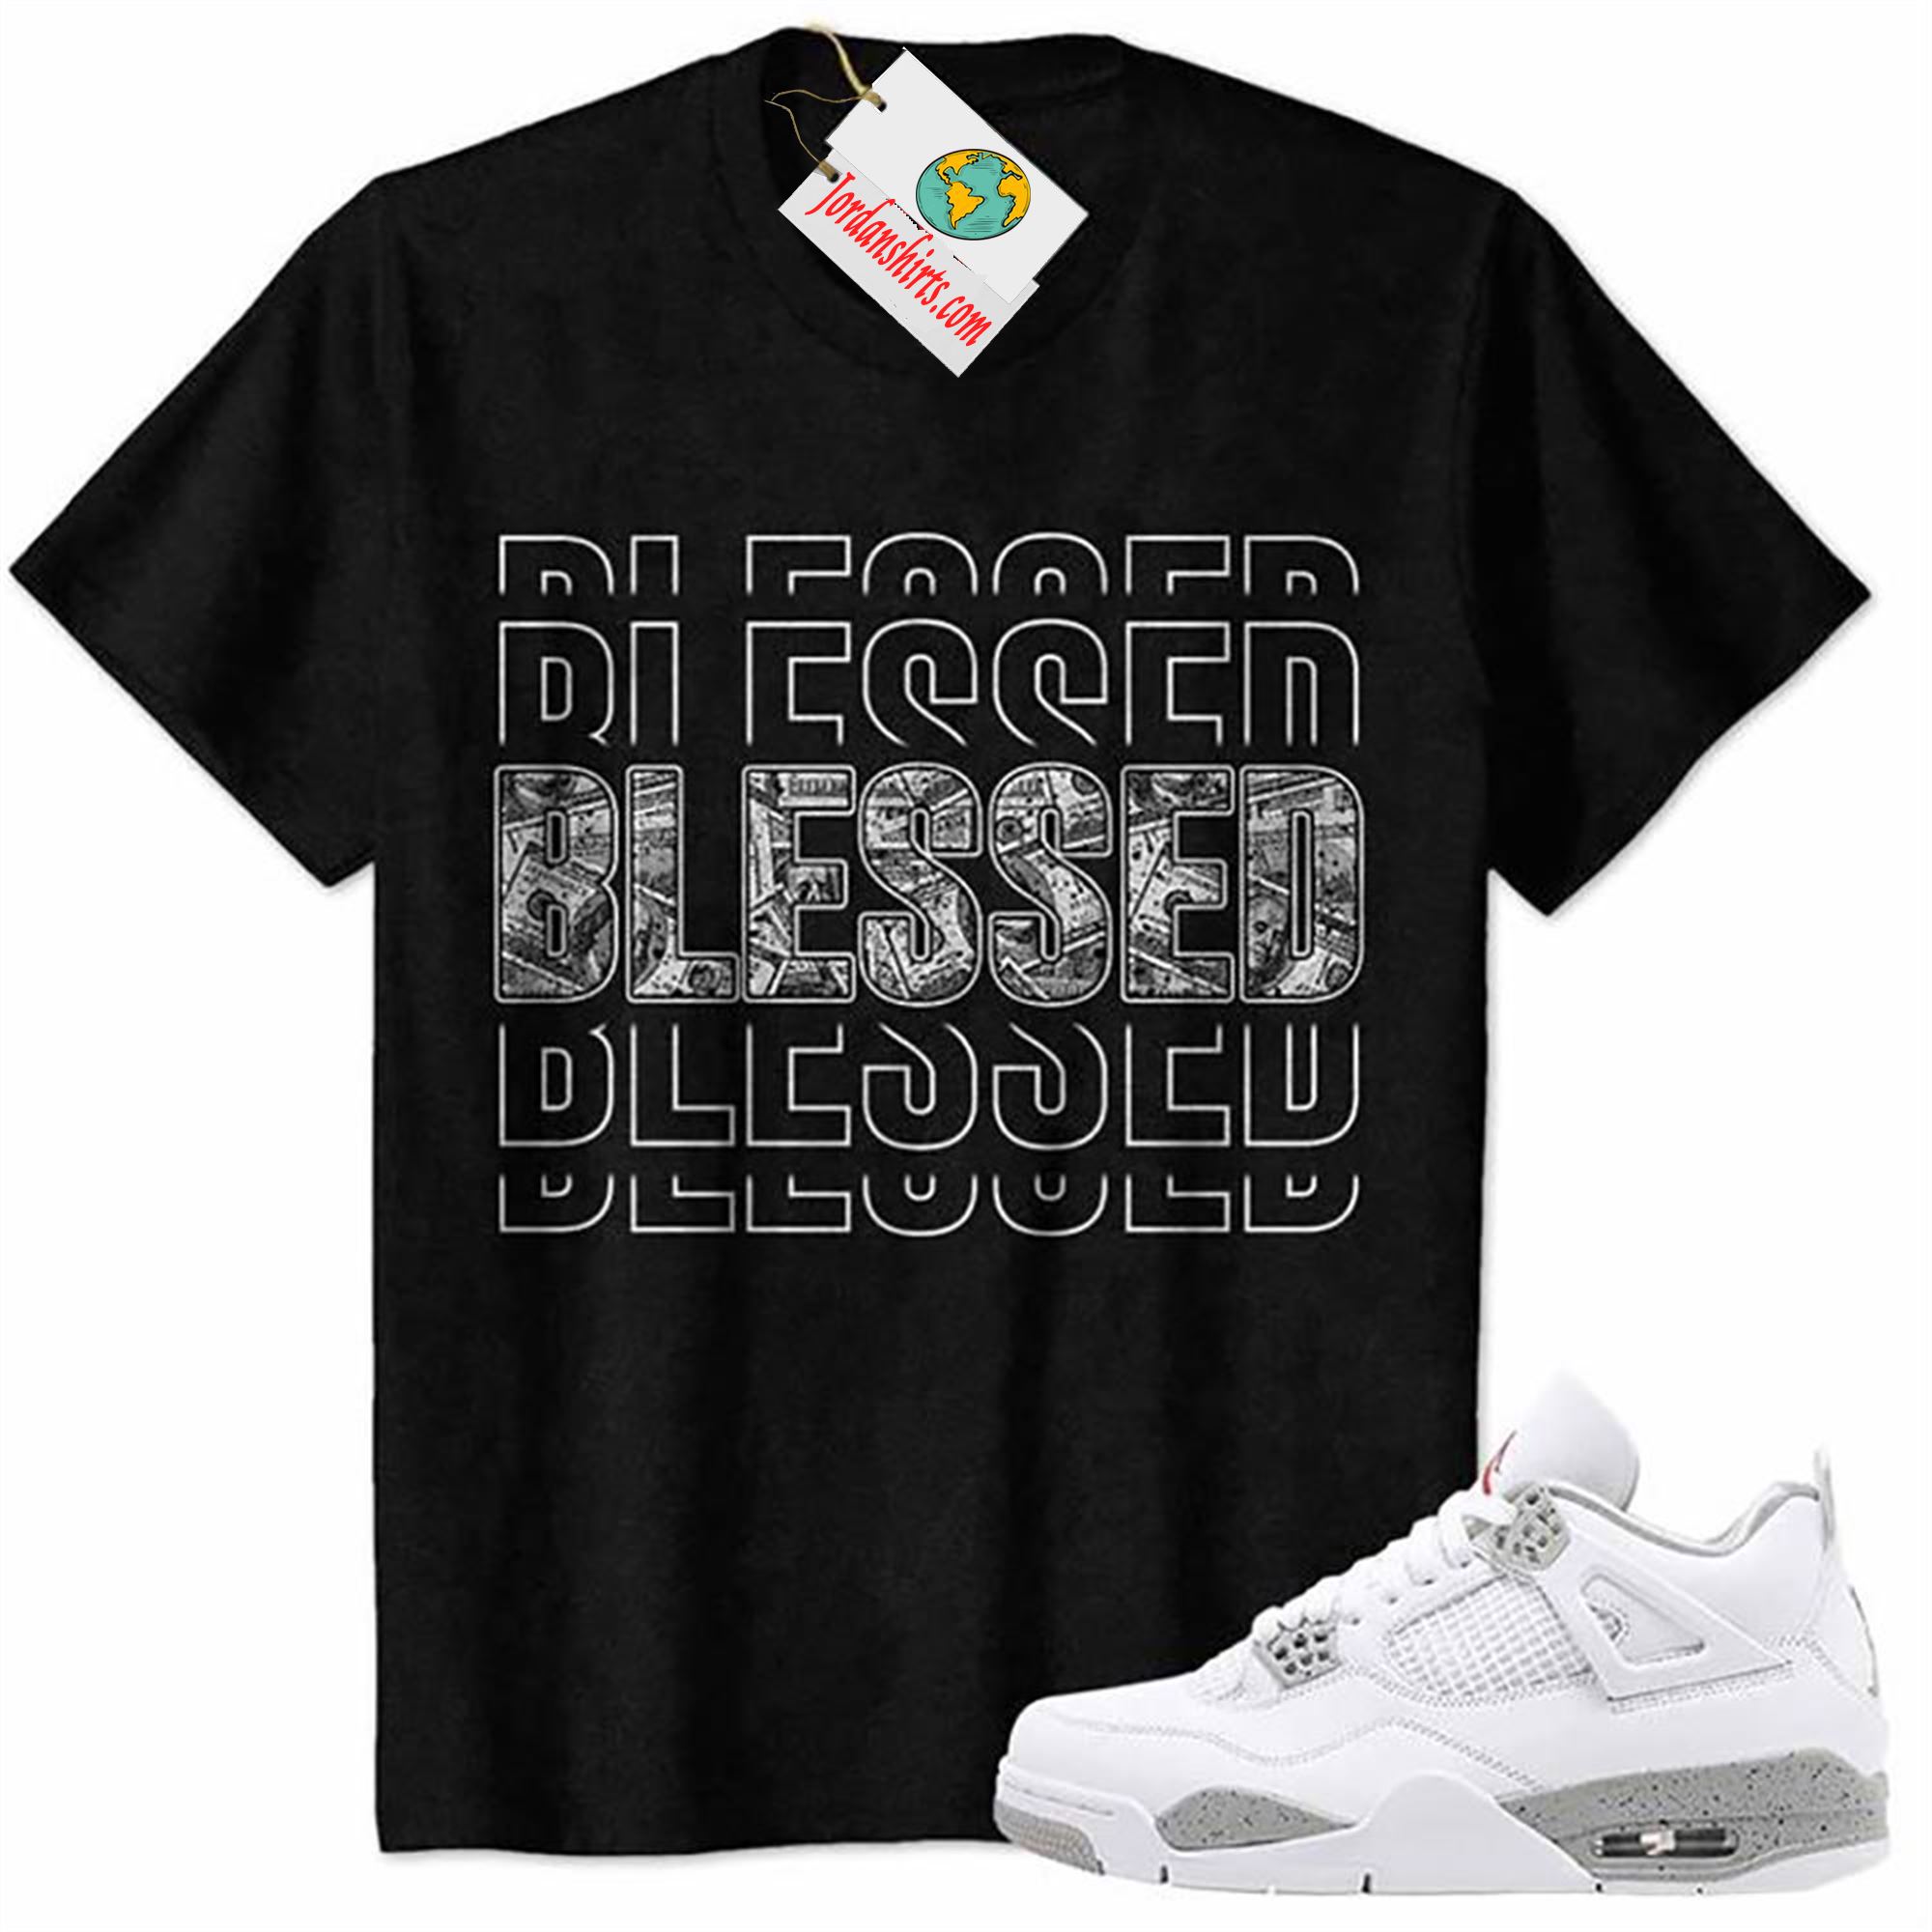 Jordan 4 Shirt, Blessed Dollar Money Black Air Jordan 4 White Oreo 4s Full Size Up To 5xl